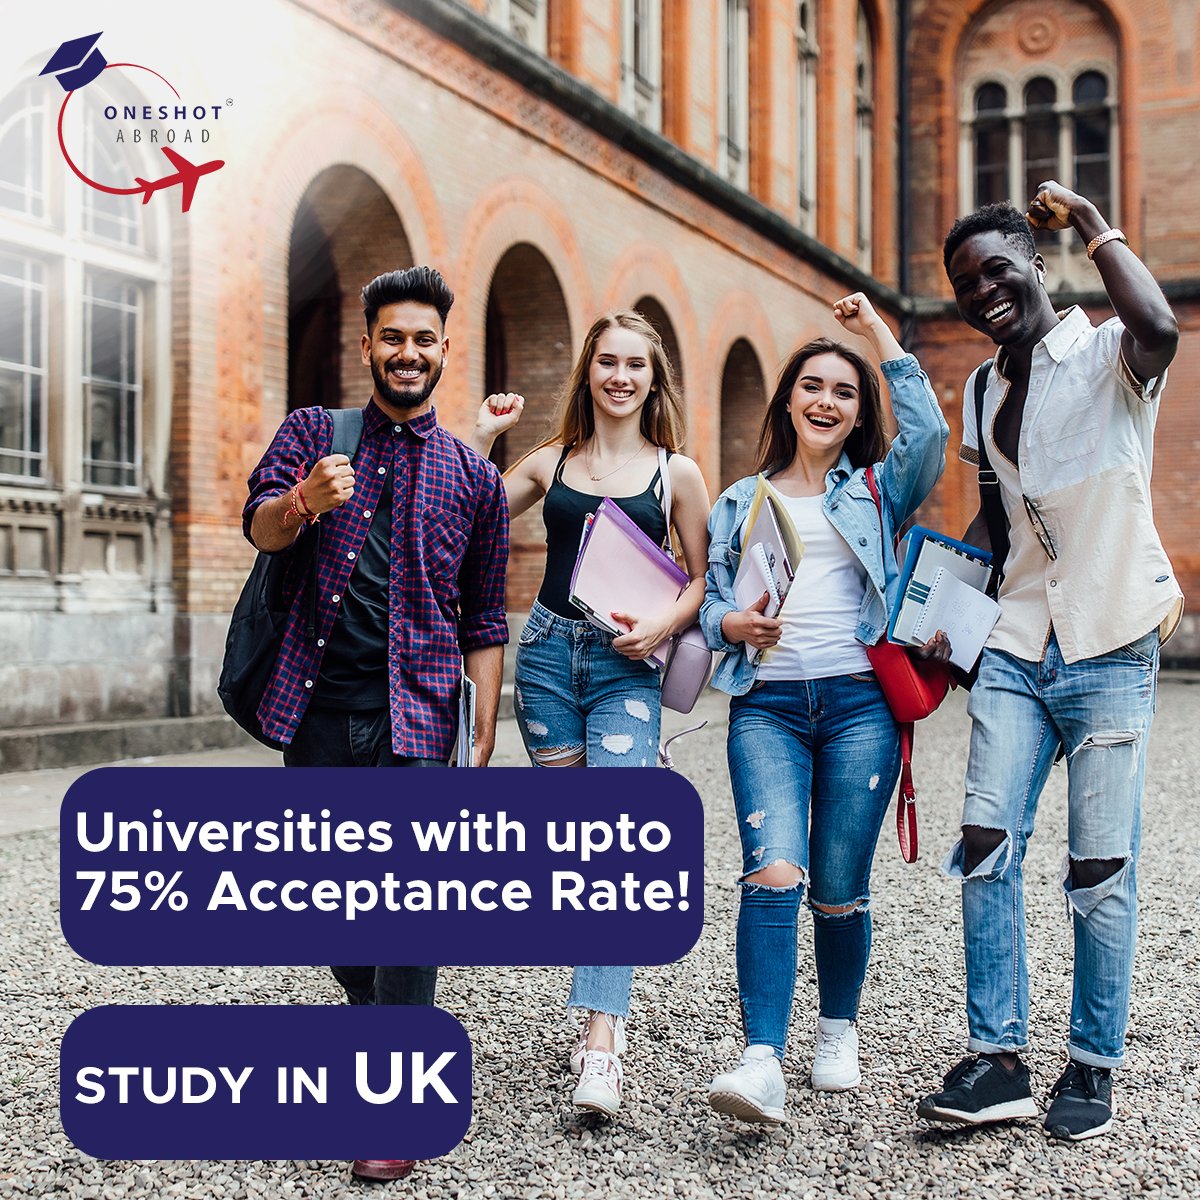 Universities upto 75% Acceptance Rate!

Study in UK!

Enroll Now @oneshotabroad
.
.
.
.
.
#studyincanada #studyinuk #studyinusa #studyabroad #expertcounsellor #expertcounselling #studyabroadconsultants #education